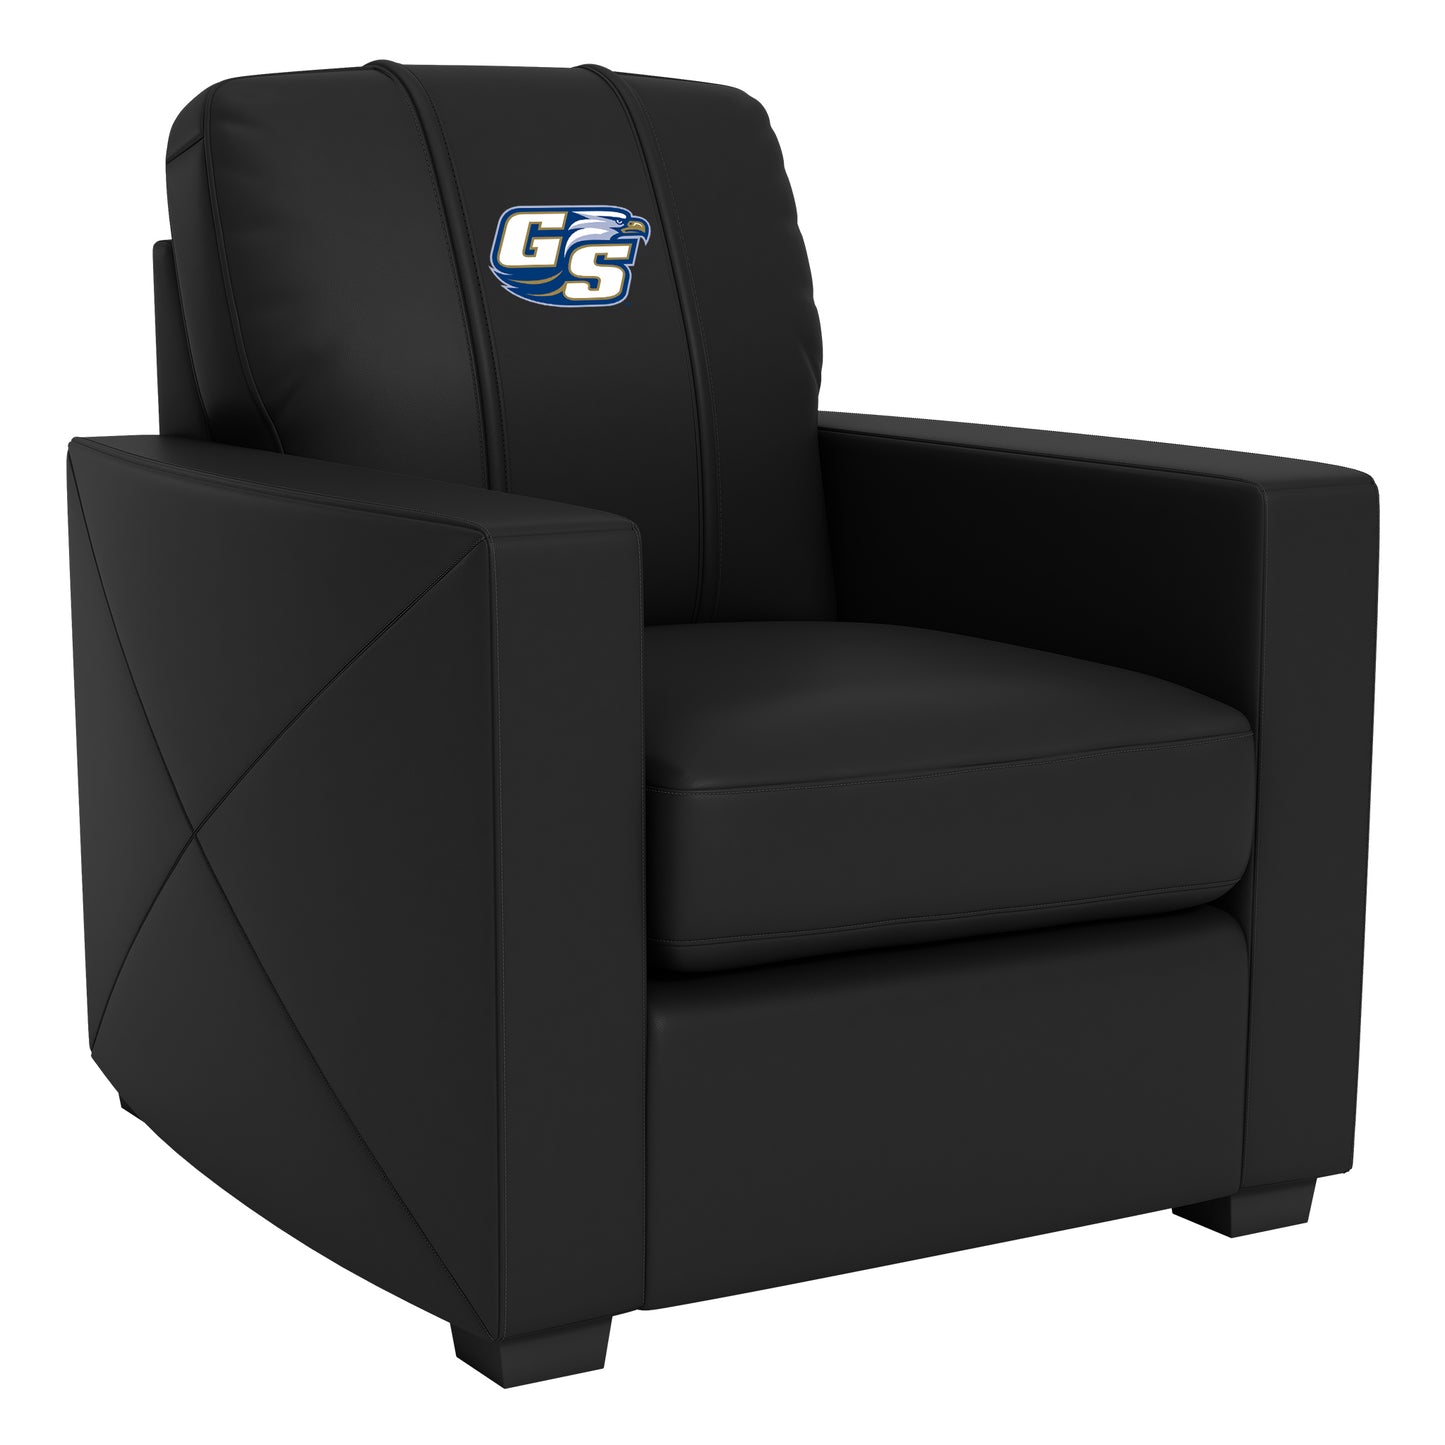 Silver Club Chair with Georgia Southern GS Eagles Logo